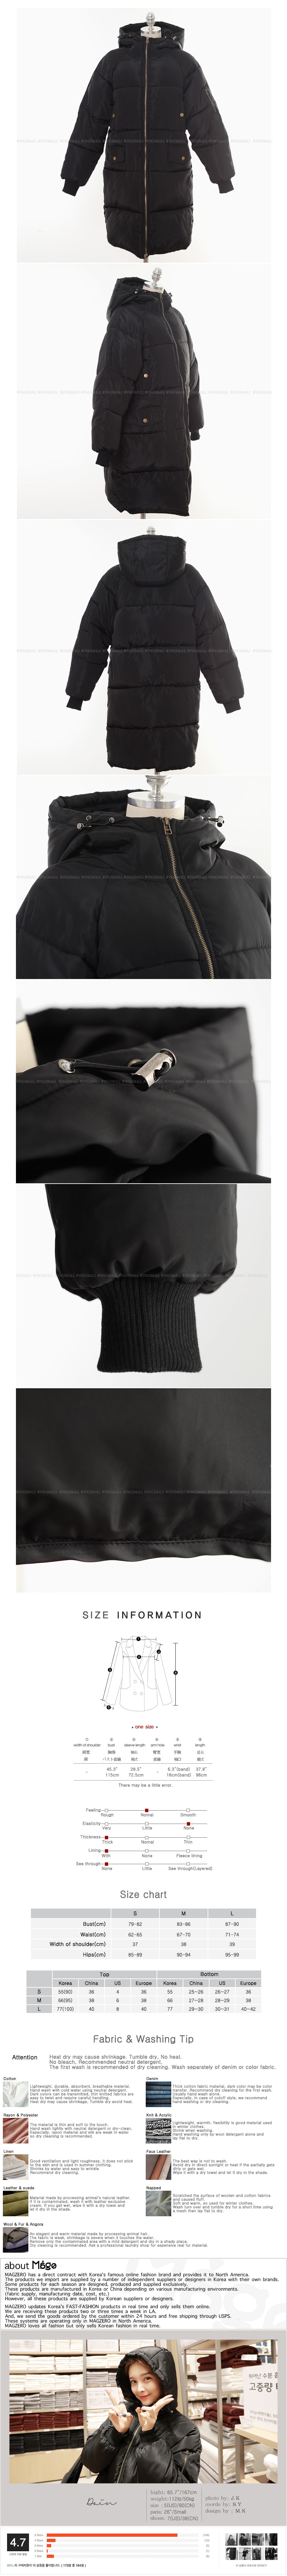 MAGZERO 【限量销售】 带帽长款棉服 #黑色 均码(Free)